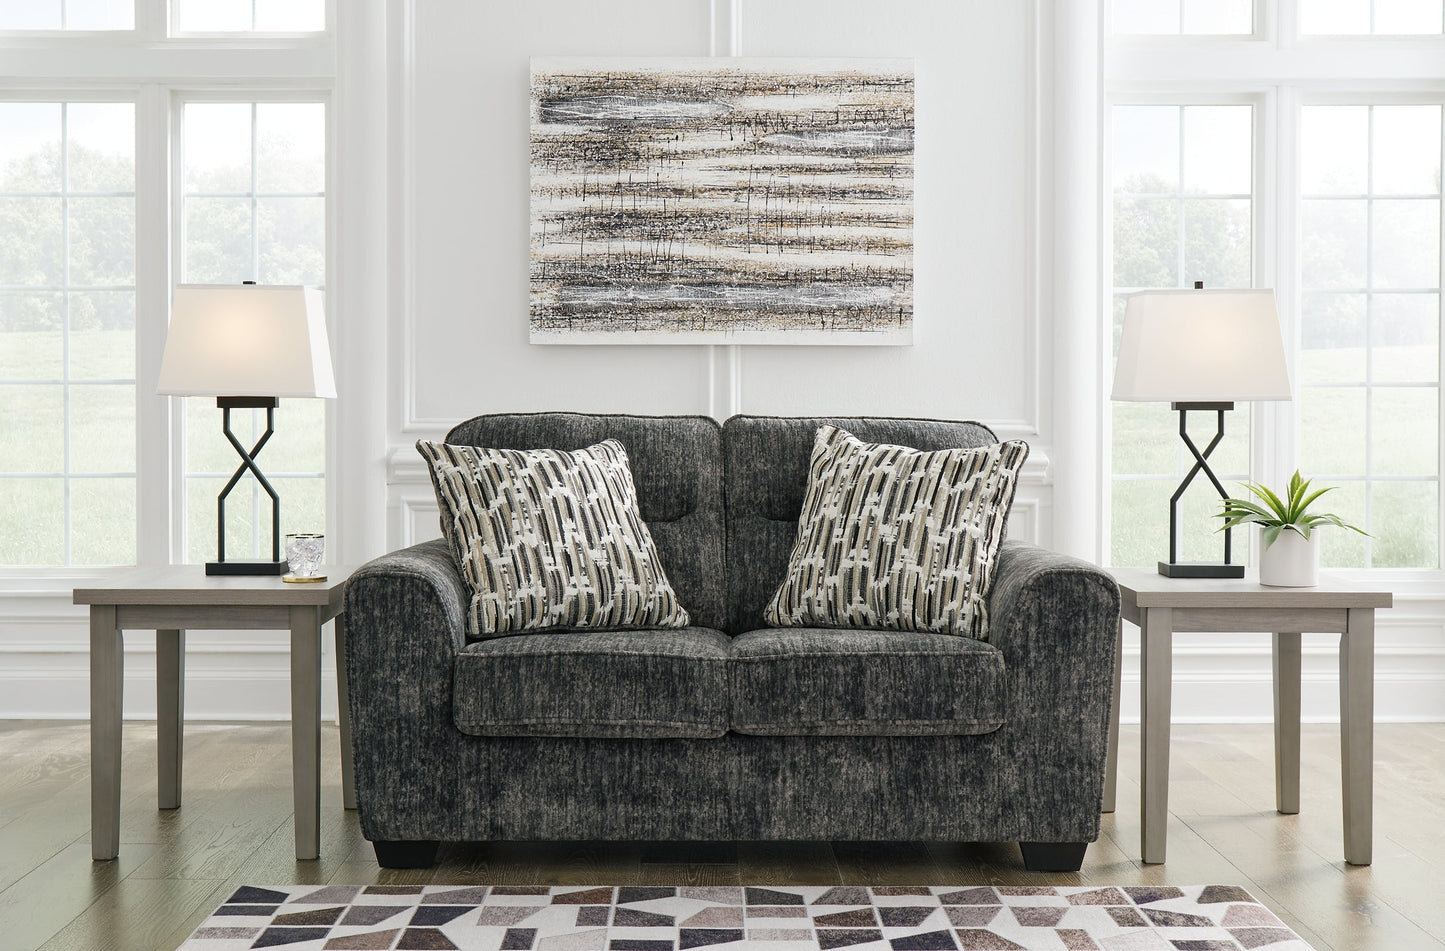 Lonoke Sofa, Loveseat, Chair and Ottoman at Towne & Country Furniture (AL) furniture, home furniture, home decor, sofa, bedding